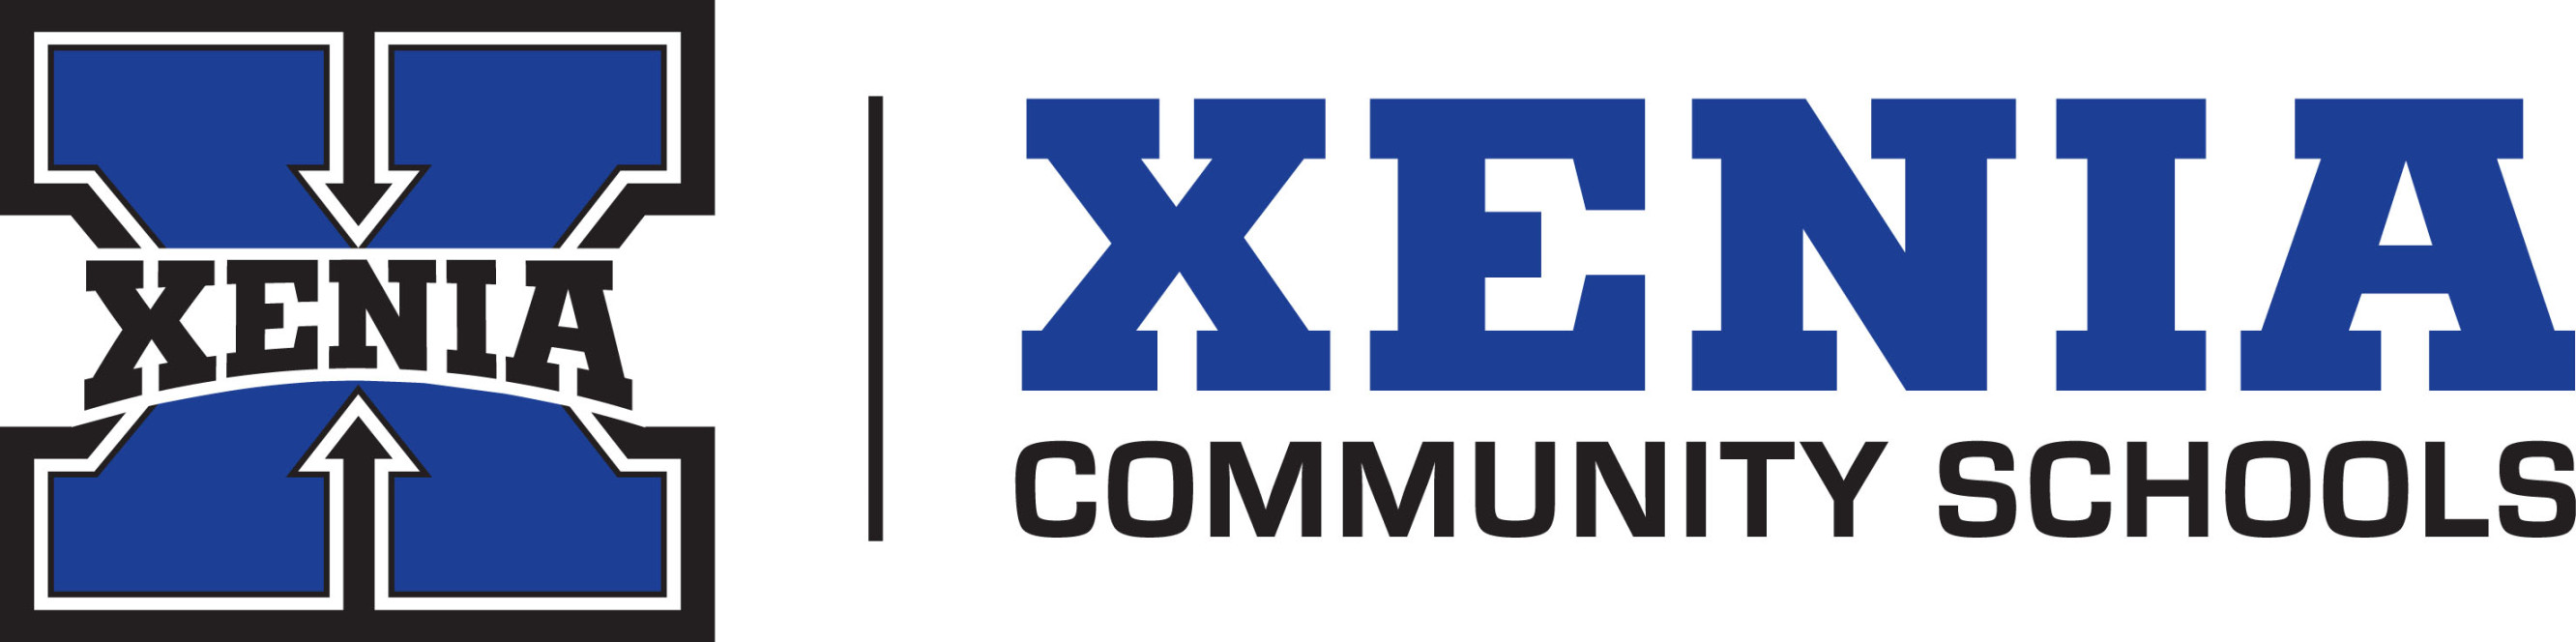 Logos to Download - Xenia Community Schools